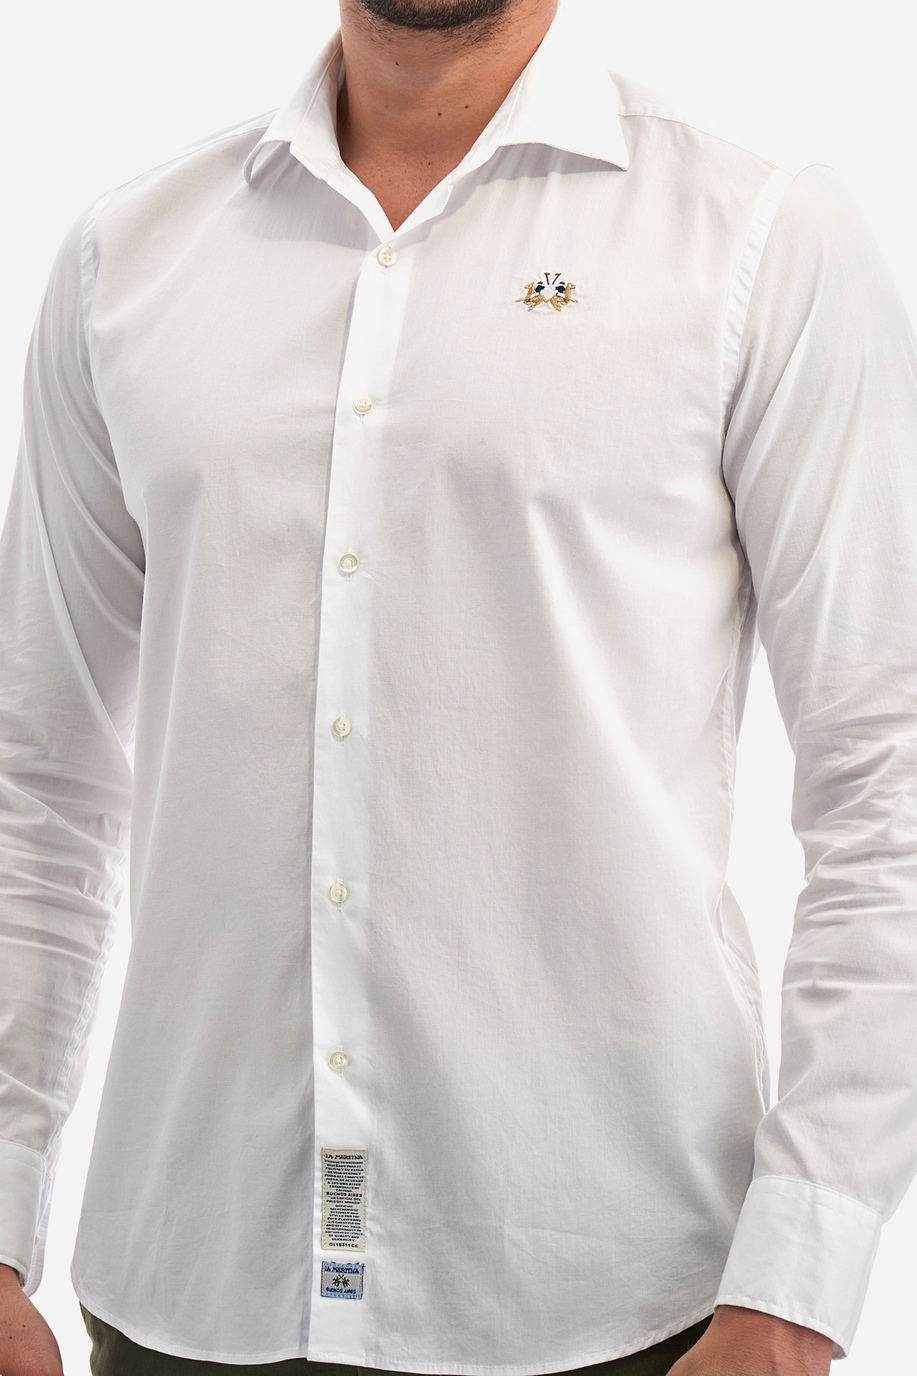 Herrenhemd Slim-Logo klein - Innocent - Hemden | La Martina - Official Online Shop